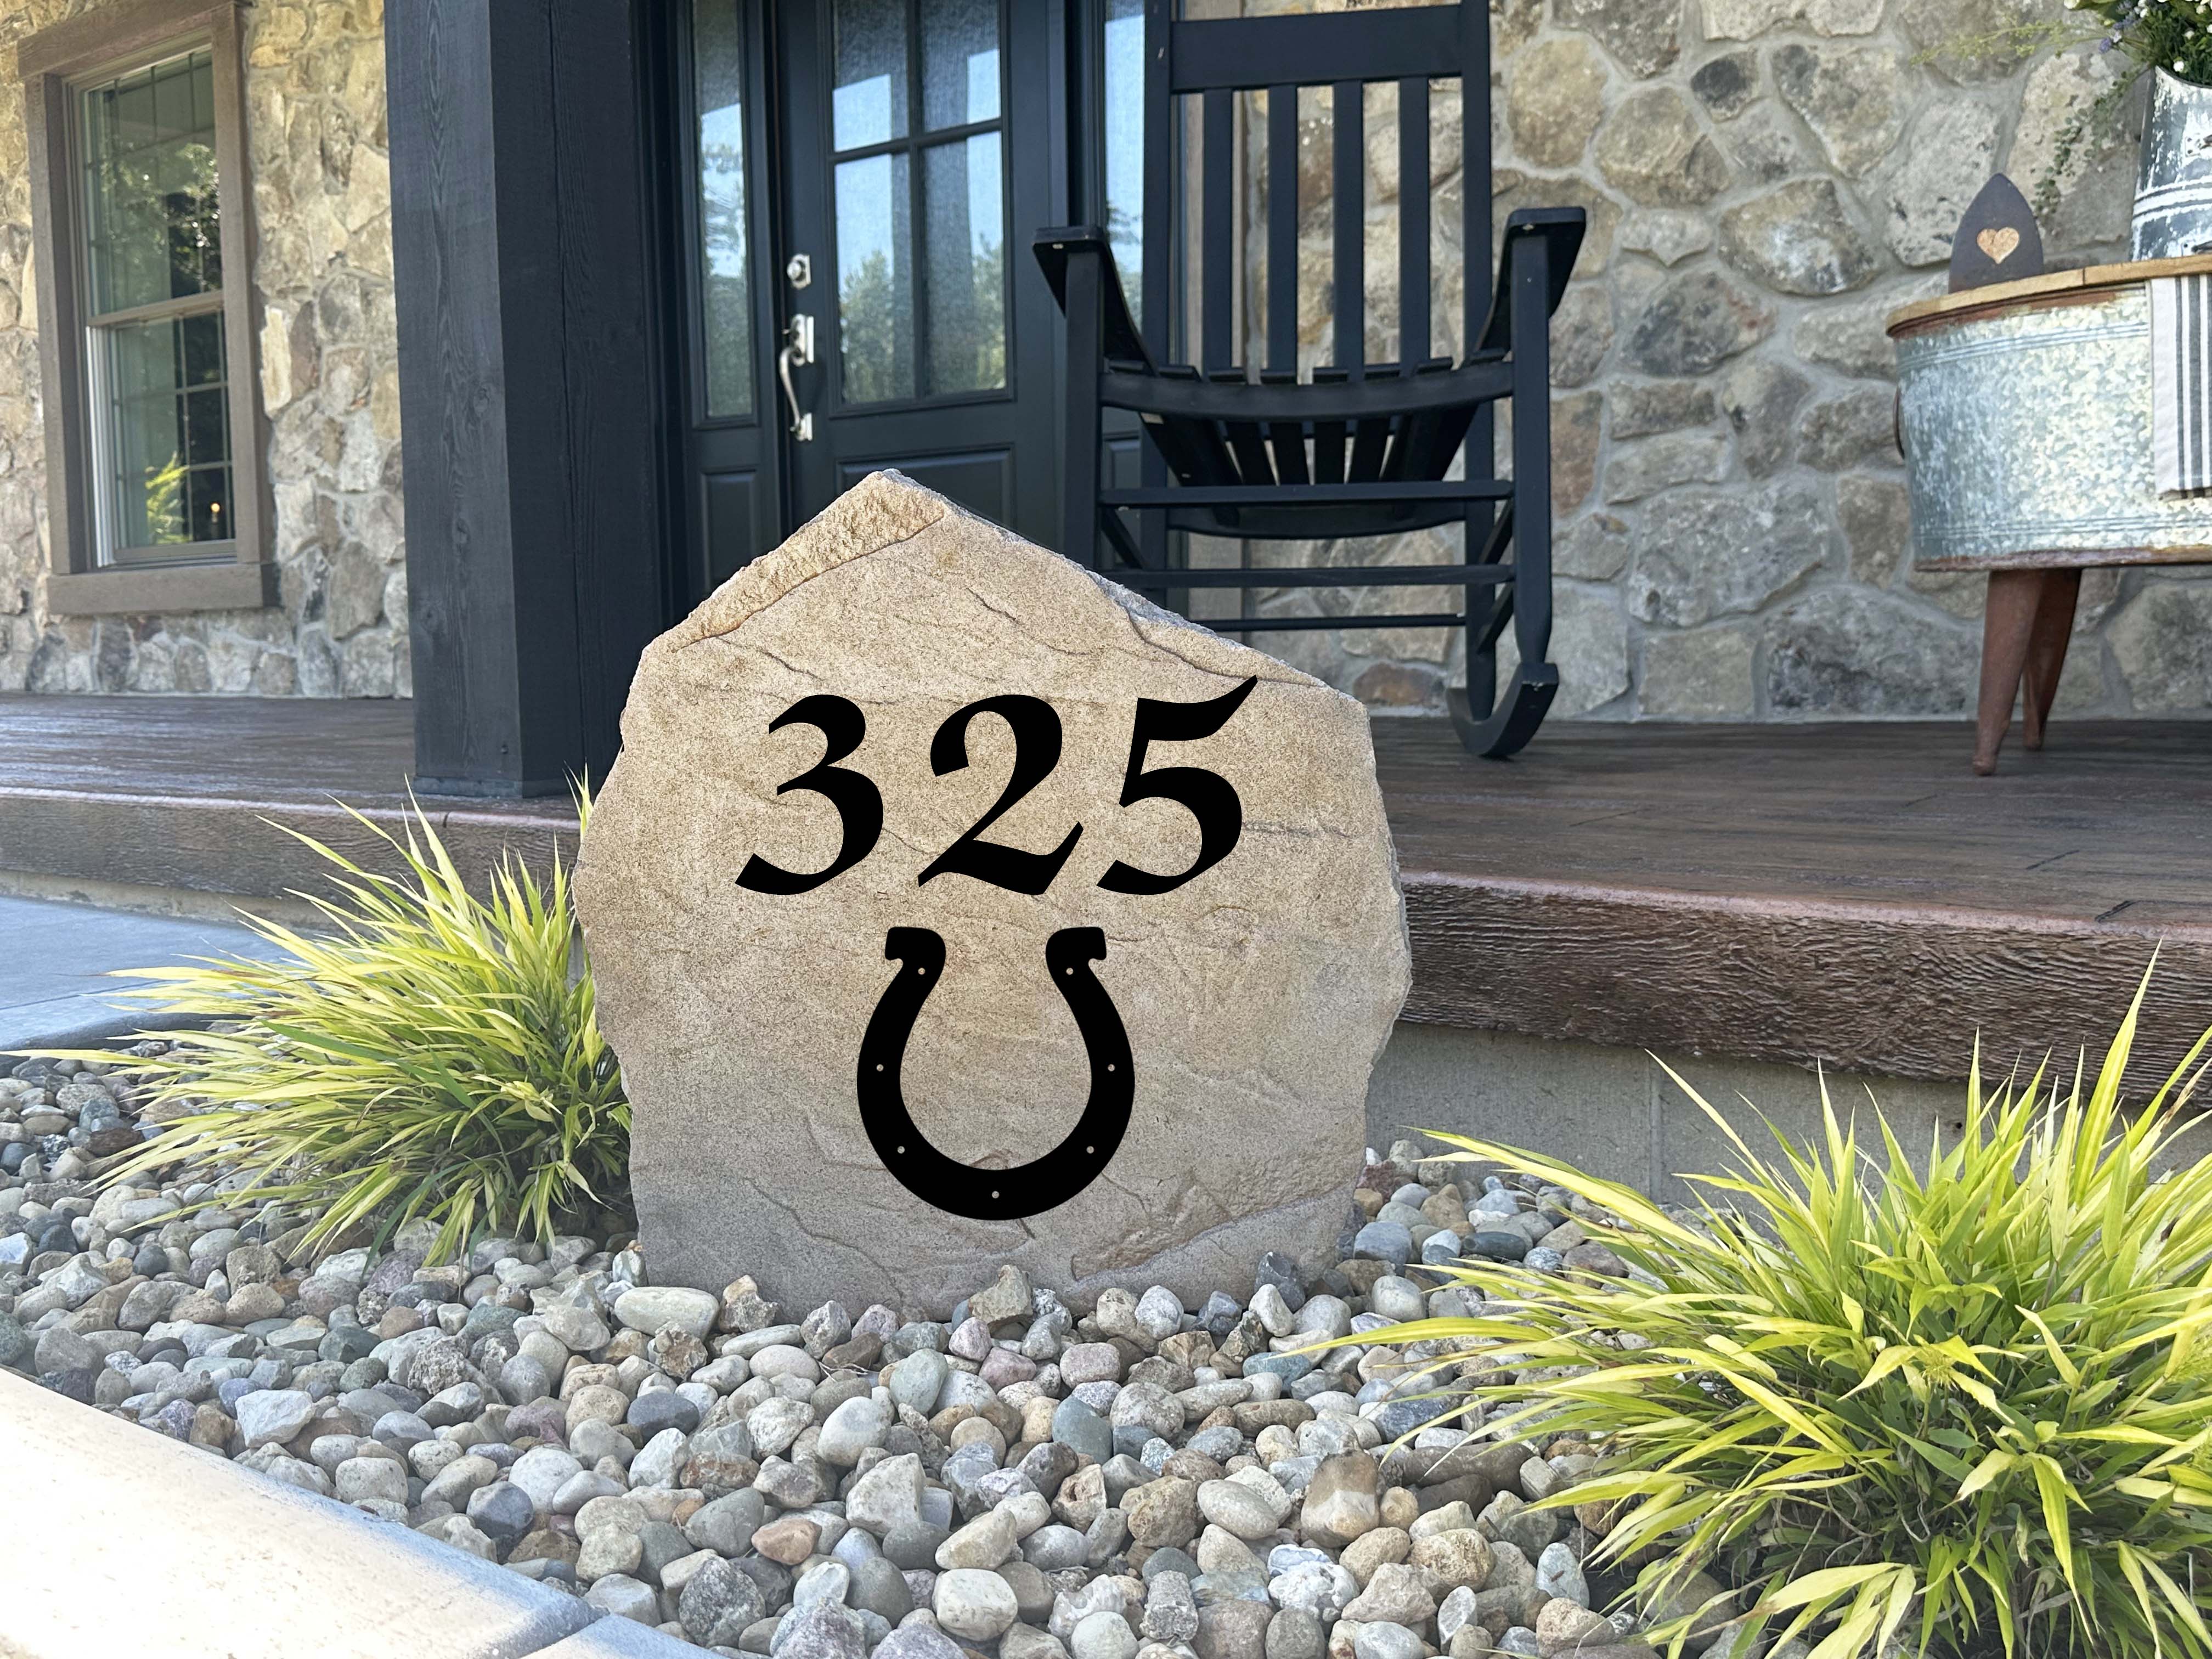 Indianapolis Colts Design-A-Stone Landscape Art Address Stone